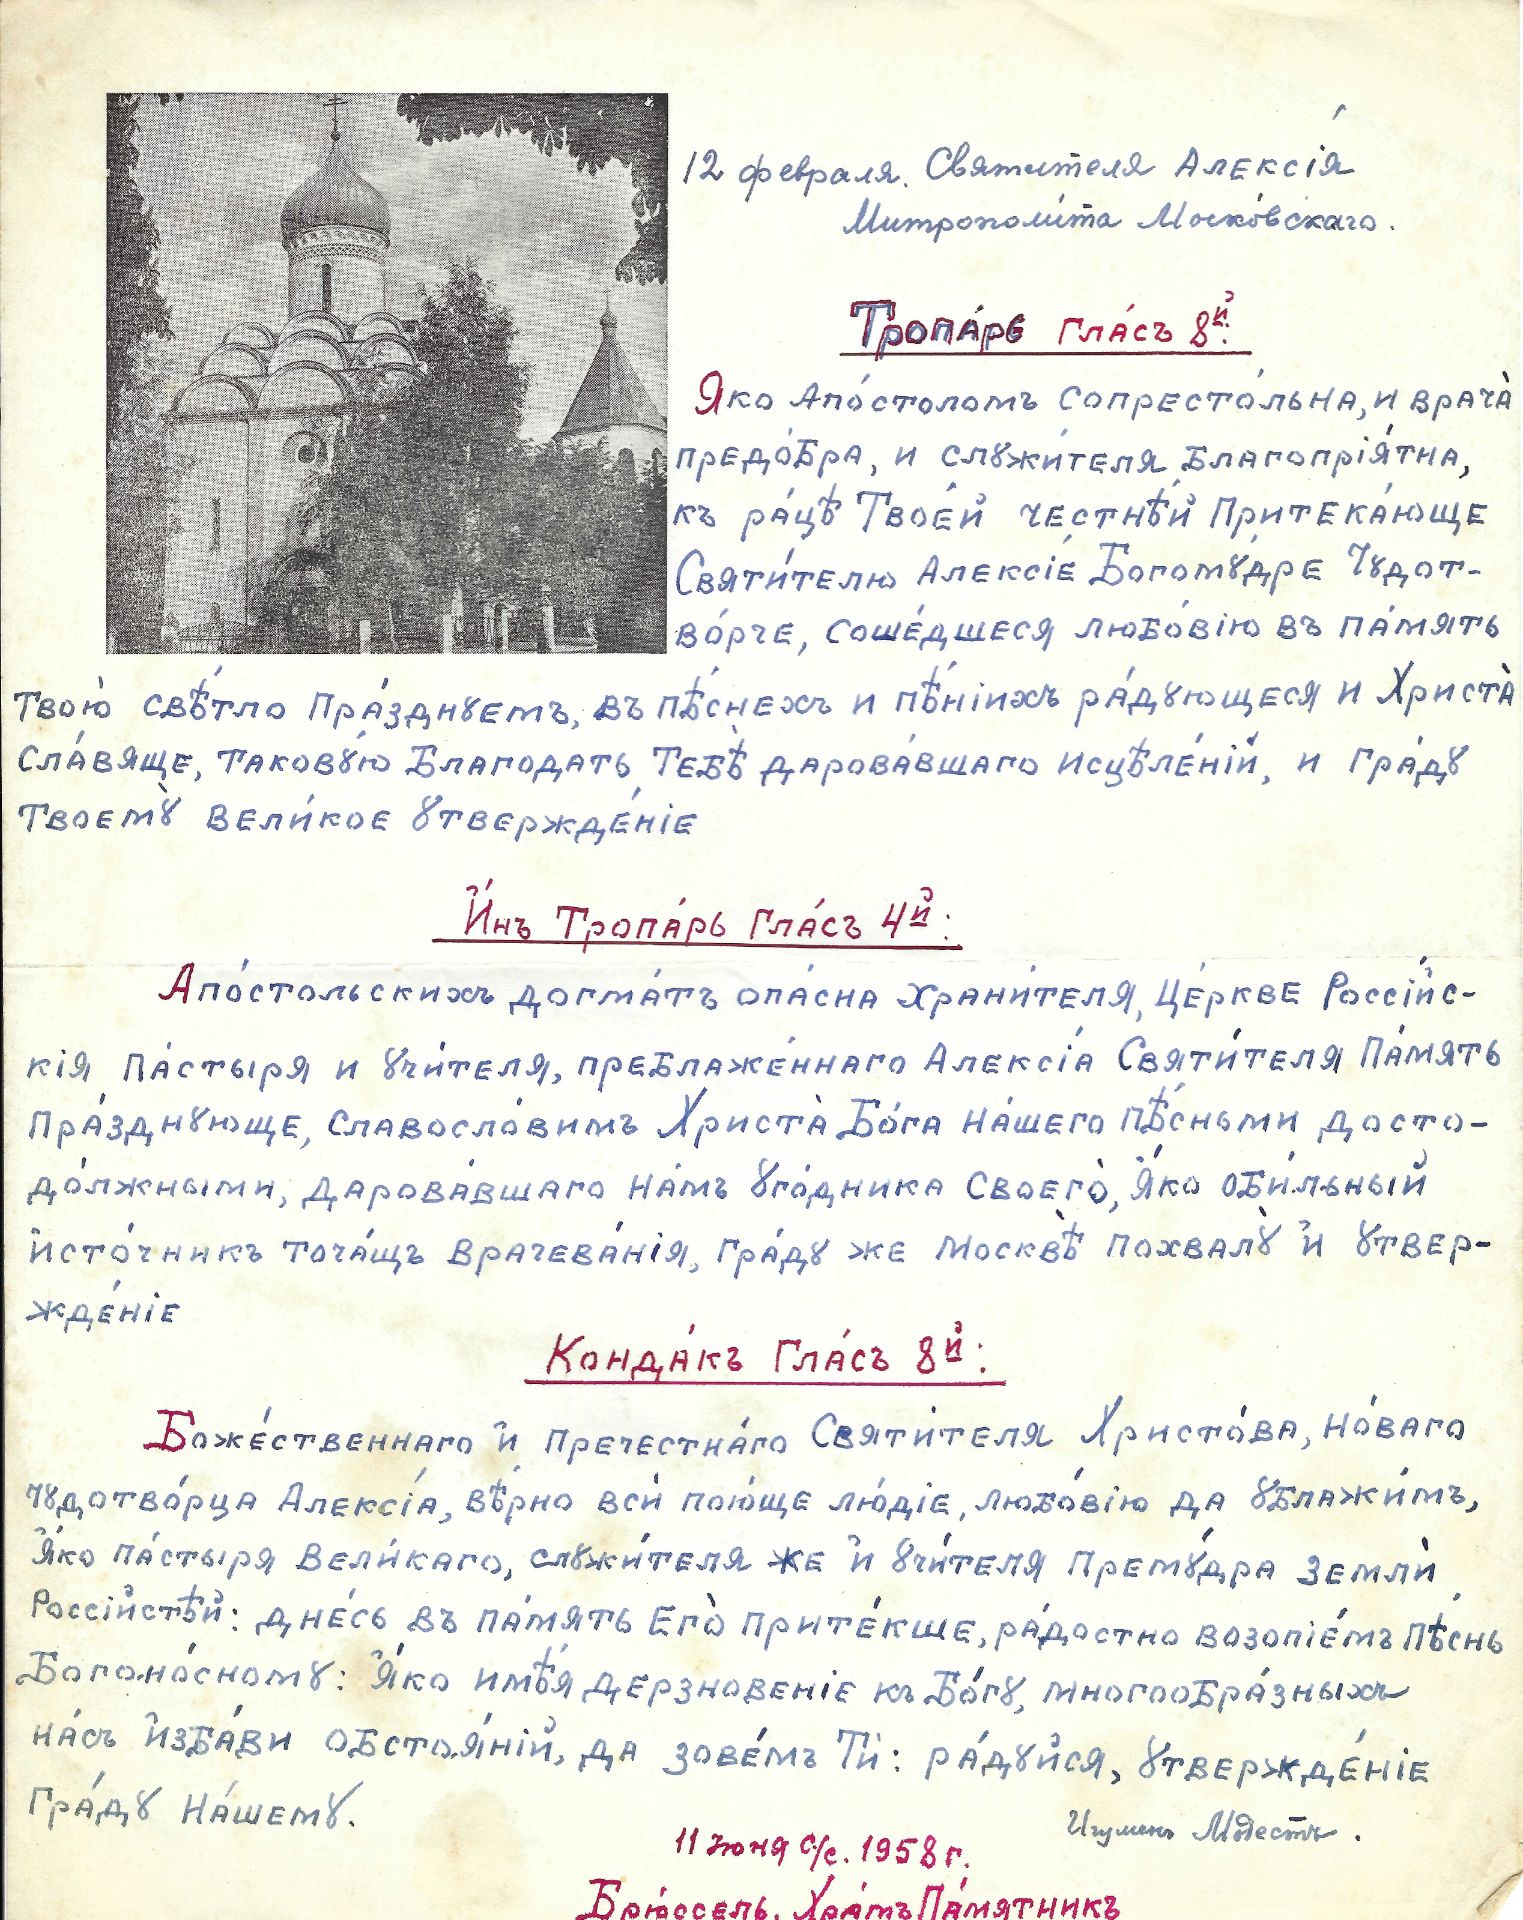 ARCHIVES D’ANDREÏ BALASHOV (1889-1969) COLLON FRÉDÉRIC ; KOLIUBAKIN I., COLONEL ; HIGOUMÈNE MODEST ; - Image 24 of 45